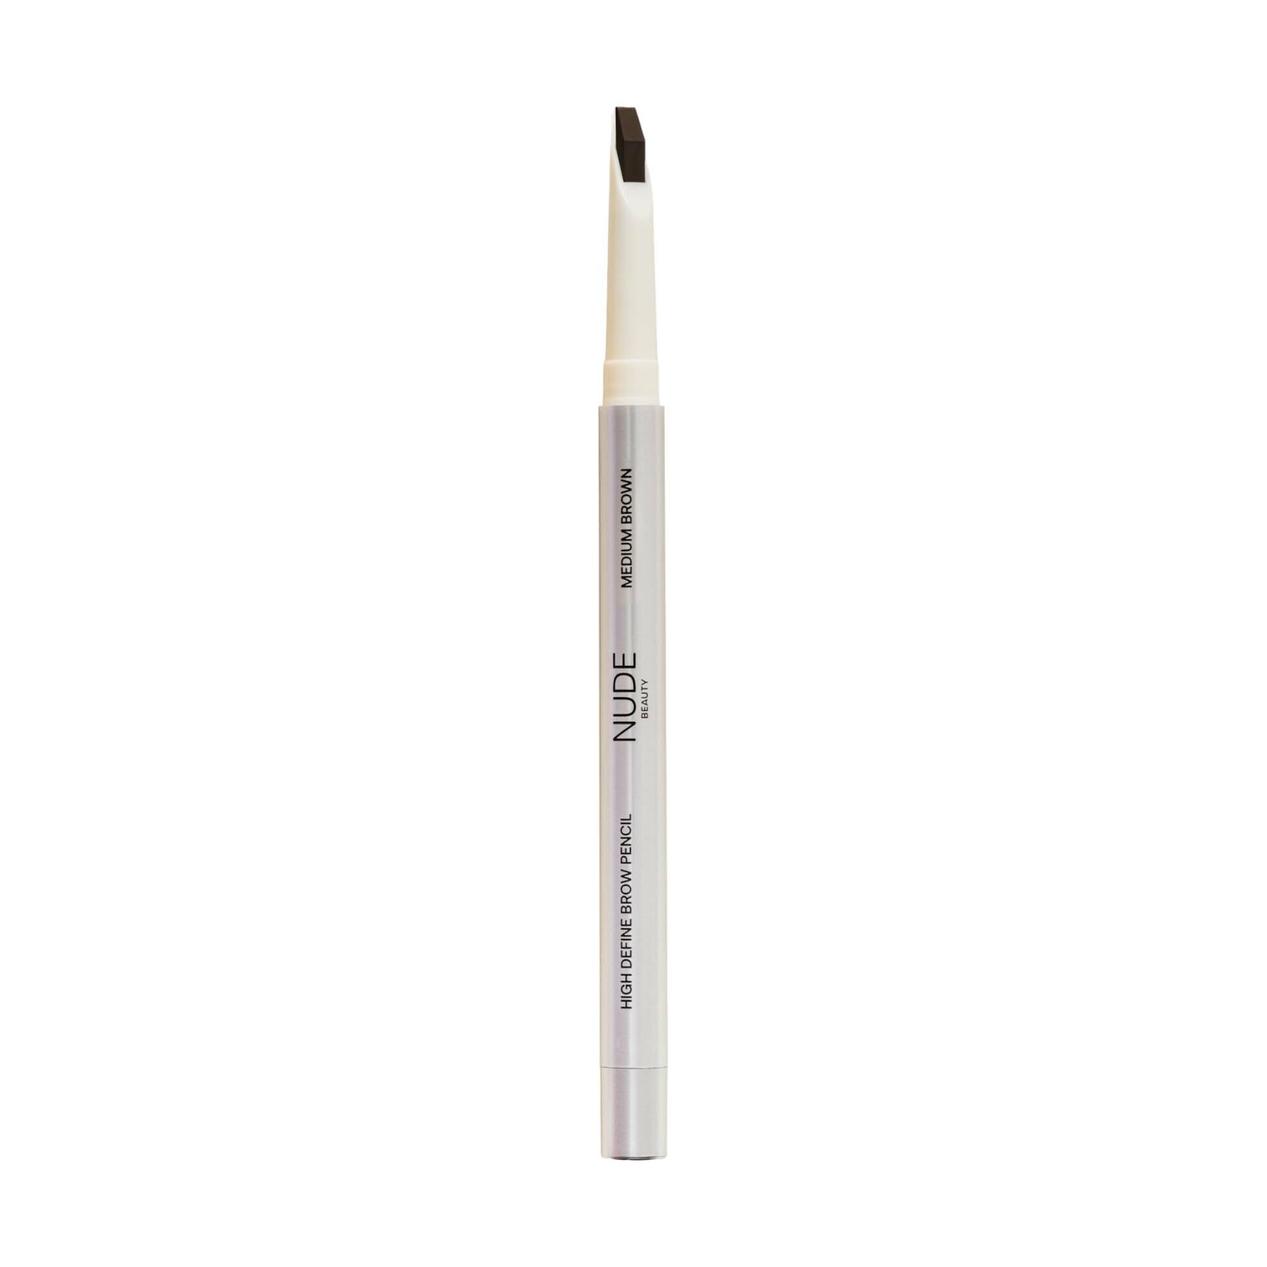 Tilbud: Nude Beauty High Define Brow Pencil Medium Brown kr 199,2 på VITA